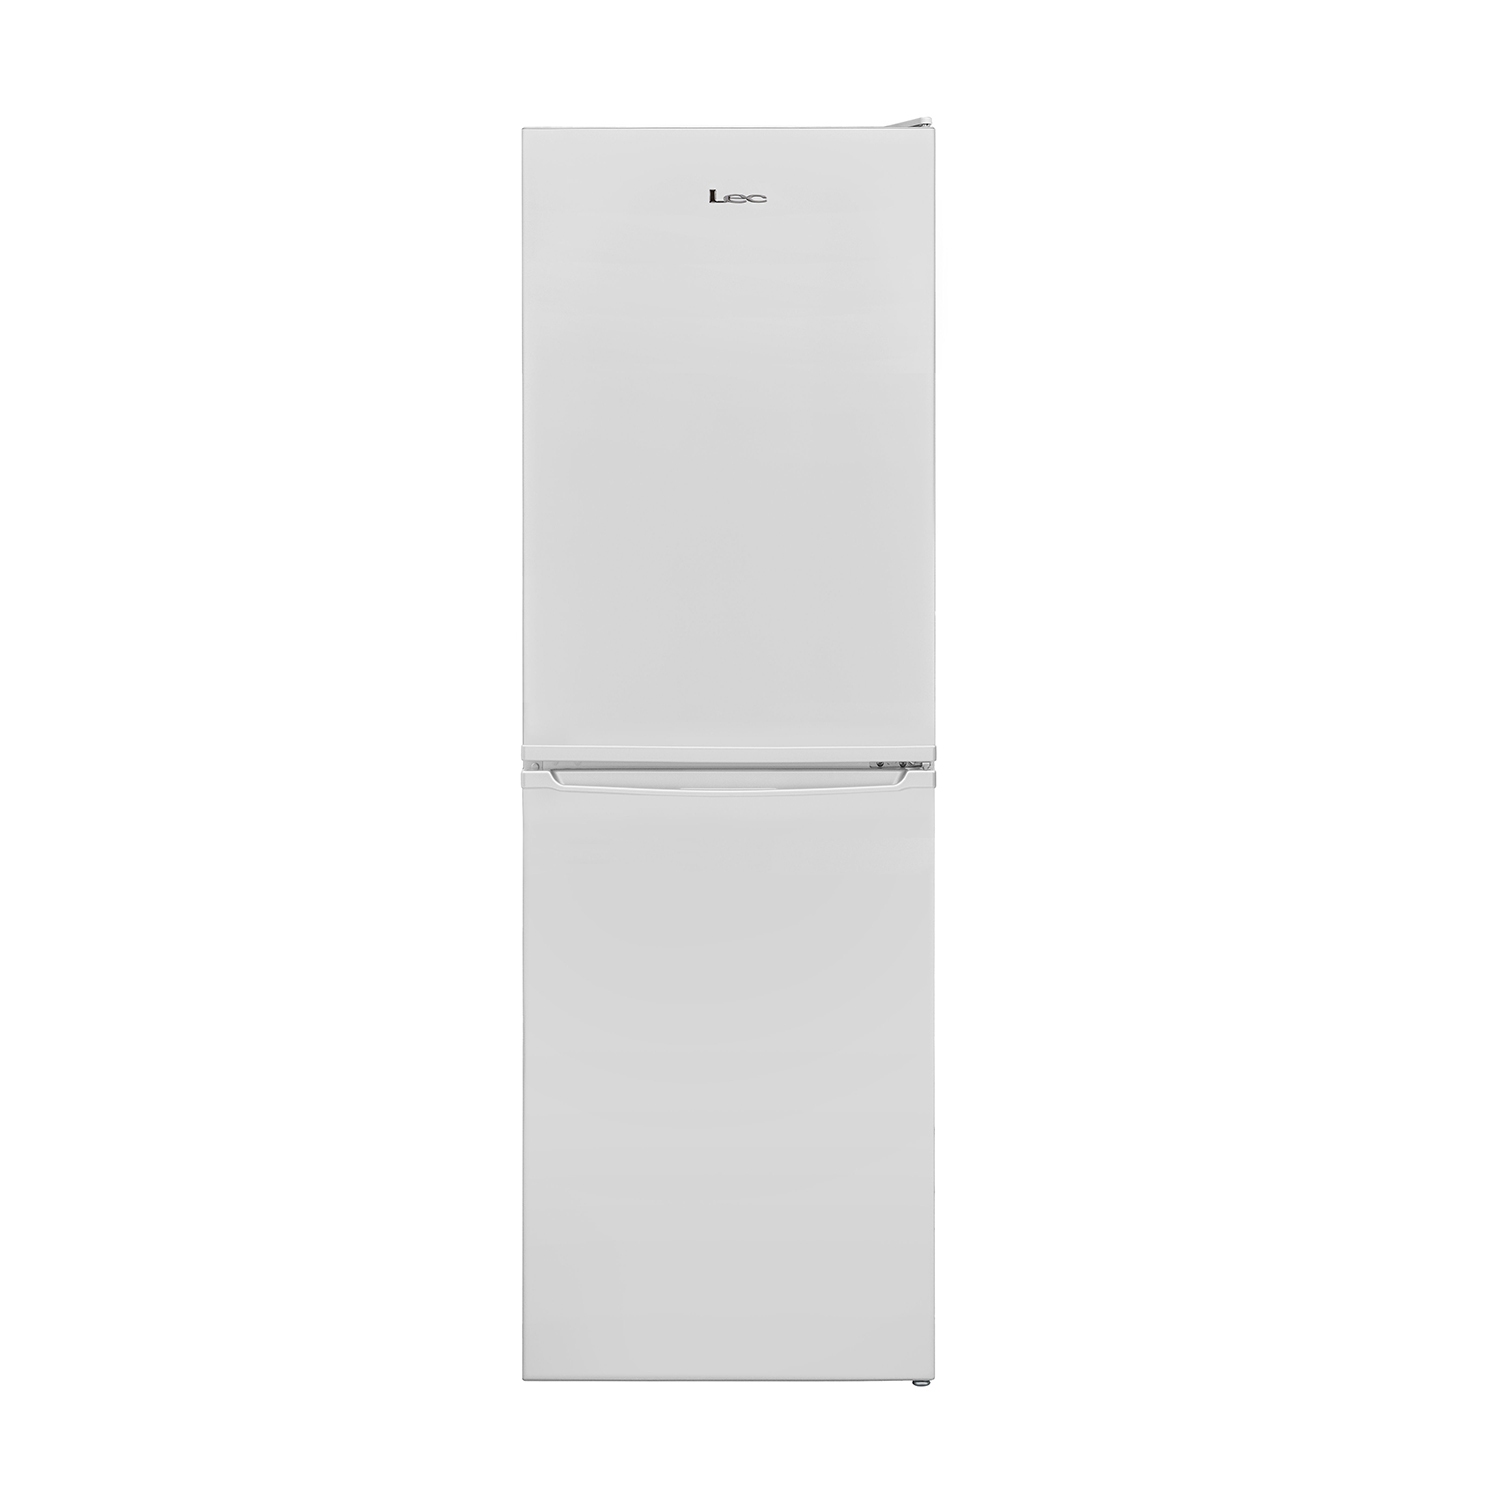 Lec TF55179W 54cm Fridge Freezer - White - Frost Free - 0